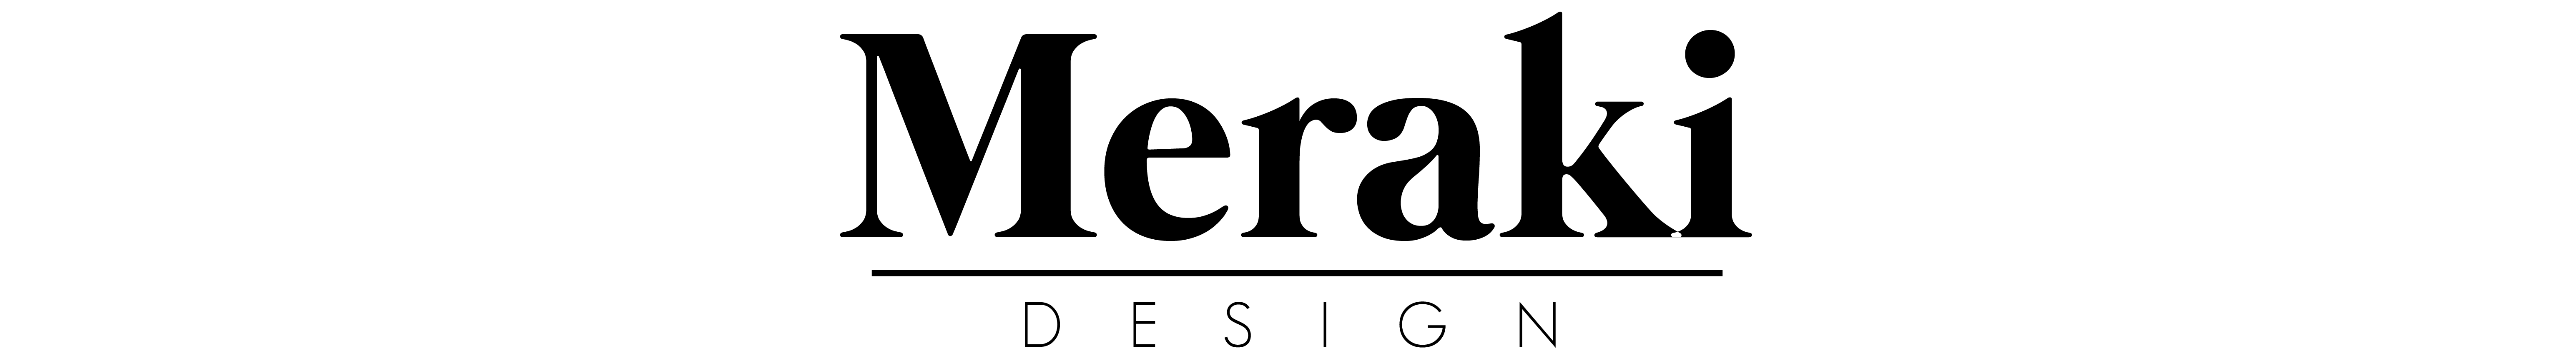 MERAKI DESIGN's profile banner